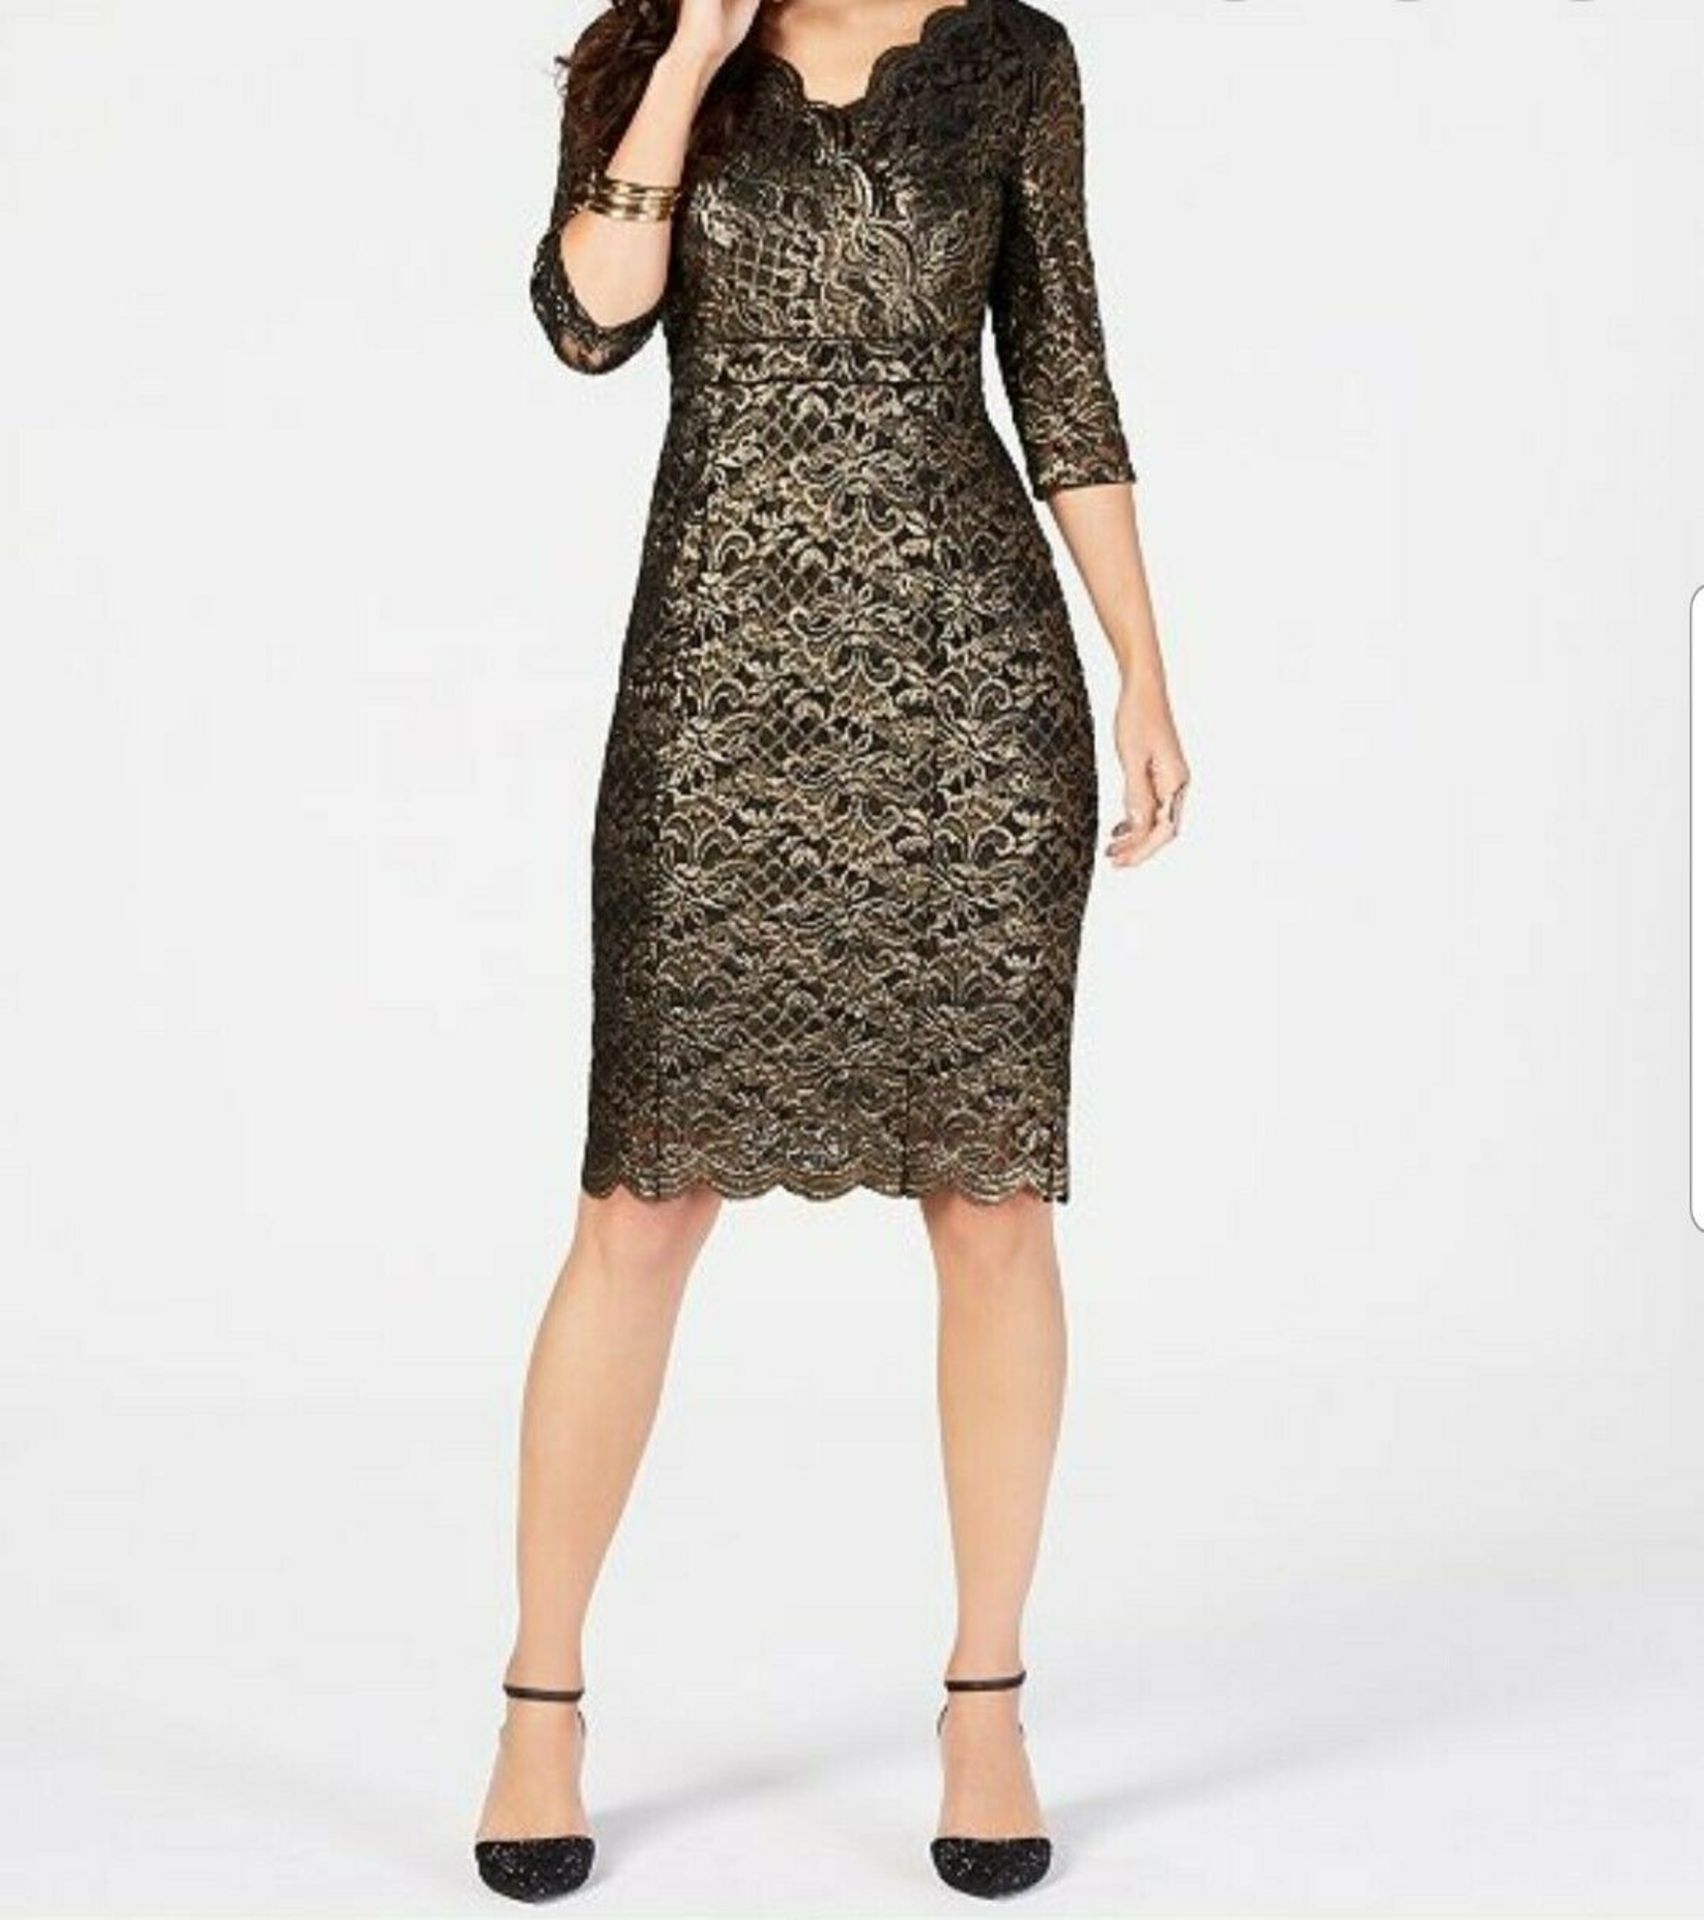 Thalia Sodi Metallic Lace Dress - Sexy Deep Black Size Xs - Image 2 of 3